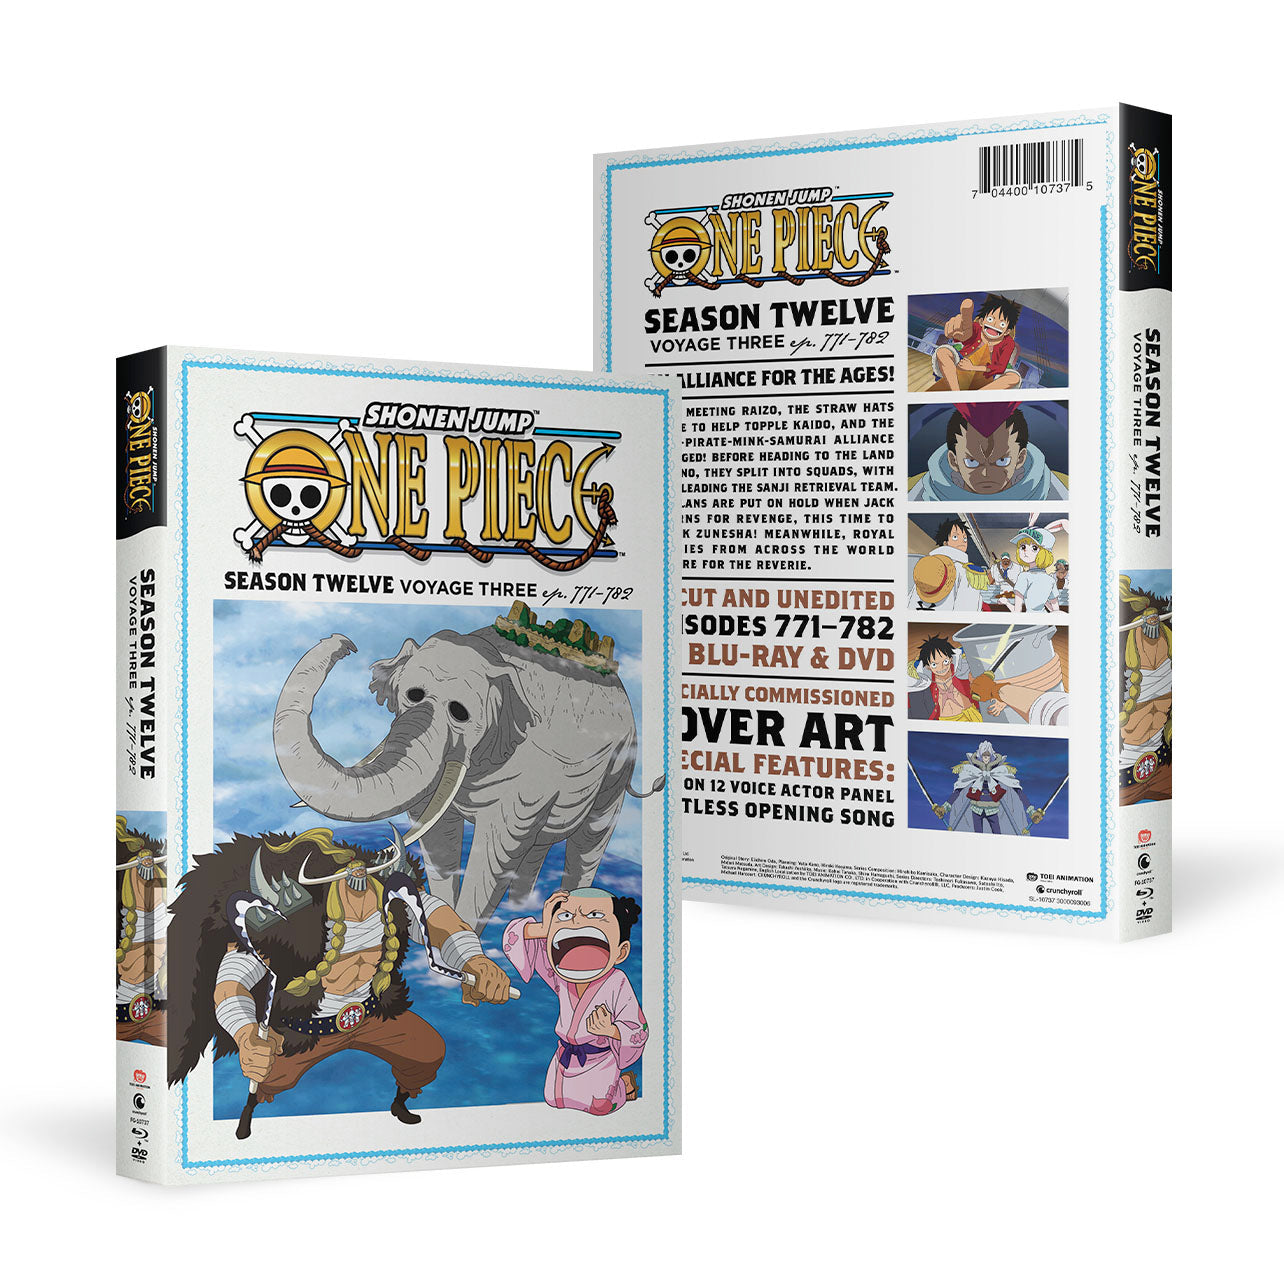 One Piece - Season 12 Voyage 3 - Bd/Dvd | Crunchyroll Store